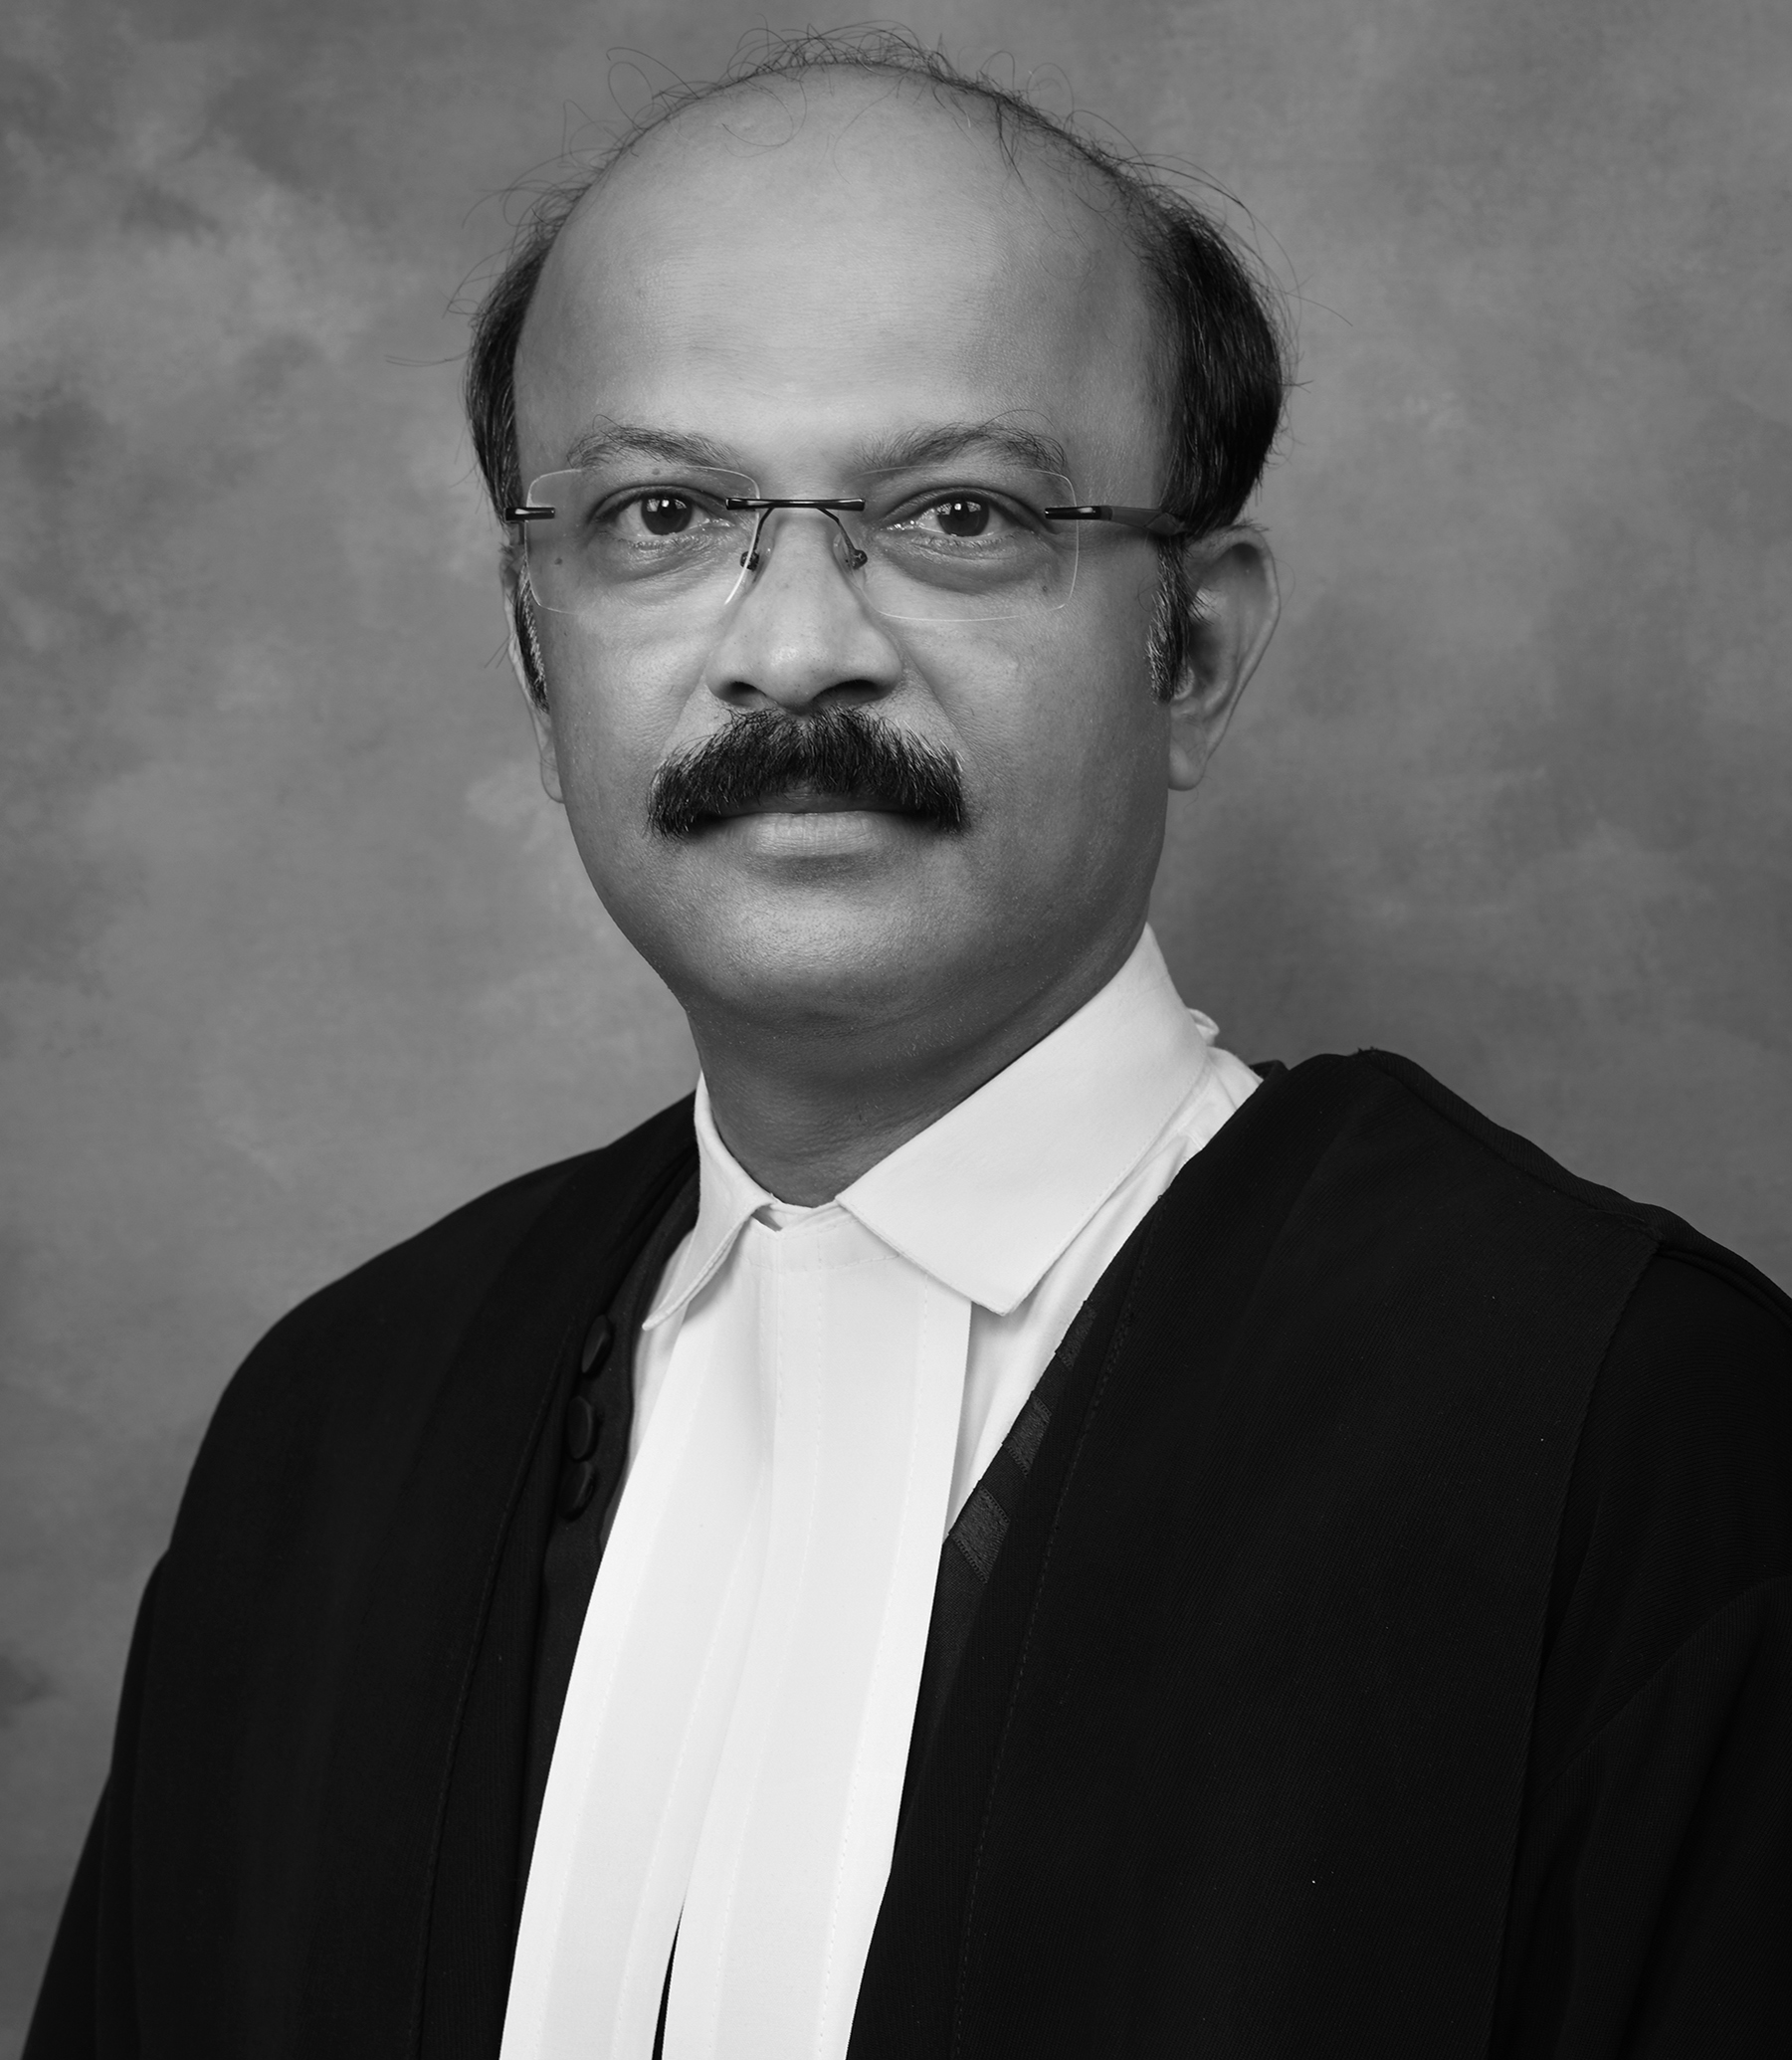 Administrative Judge